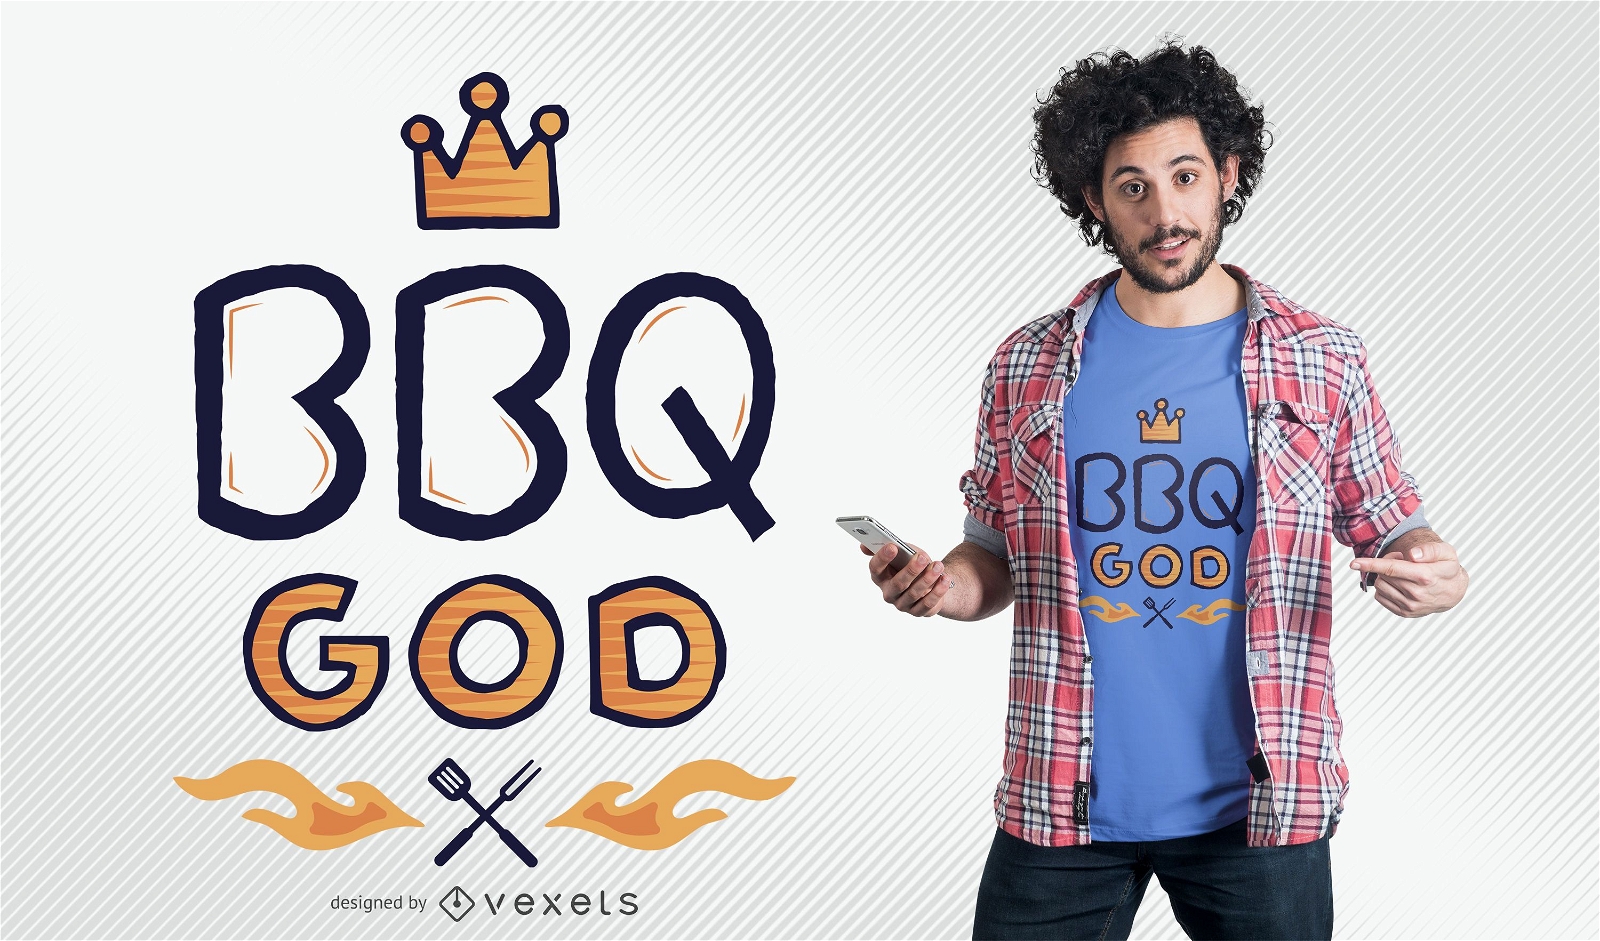 BBQ god t-shirt design